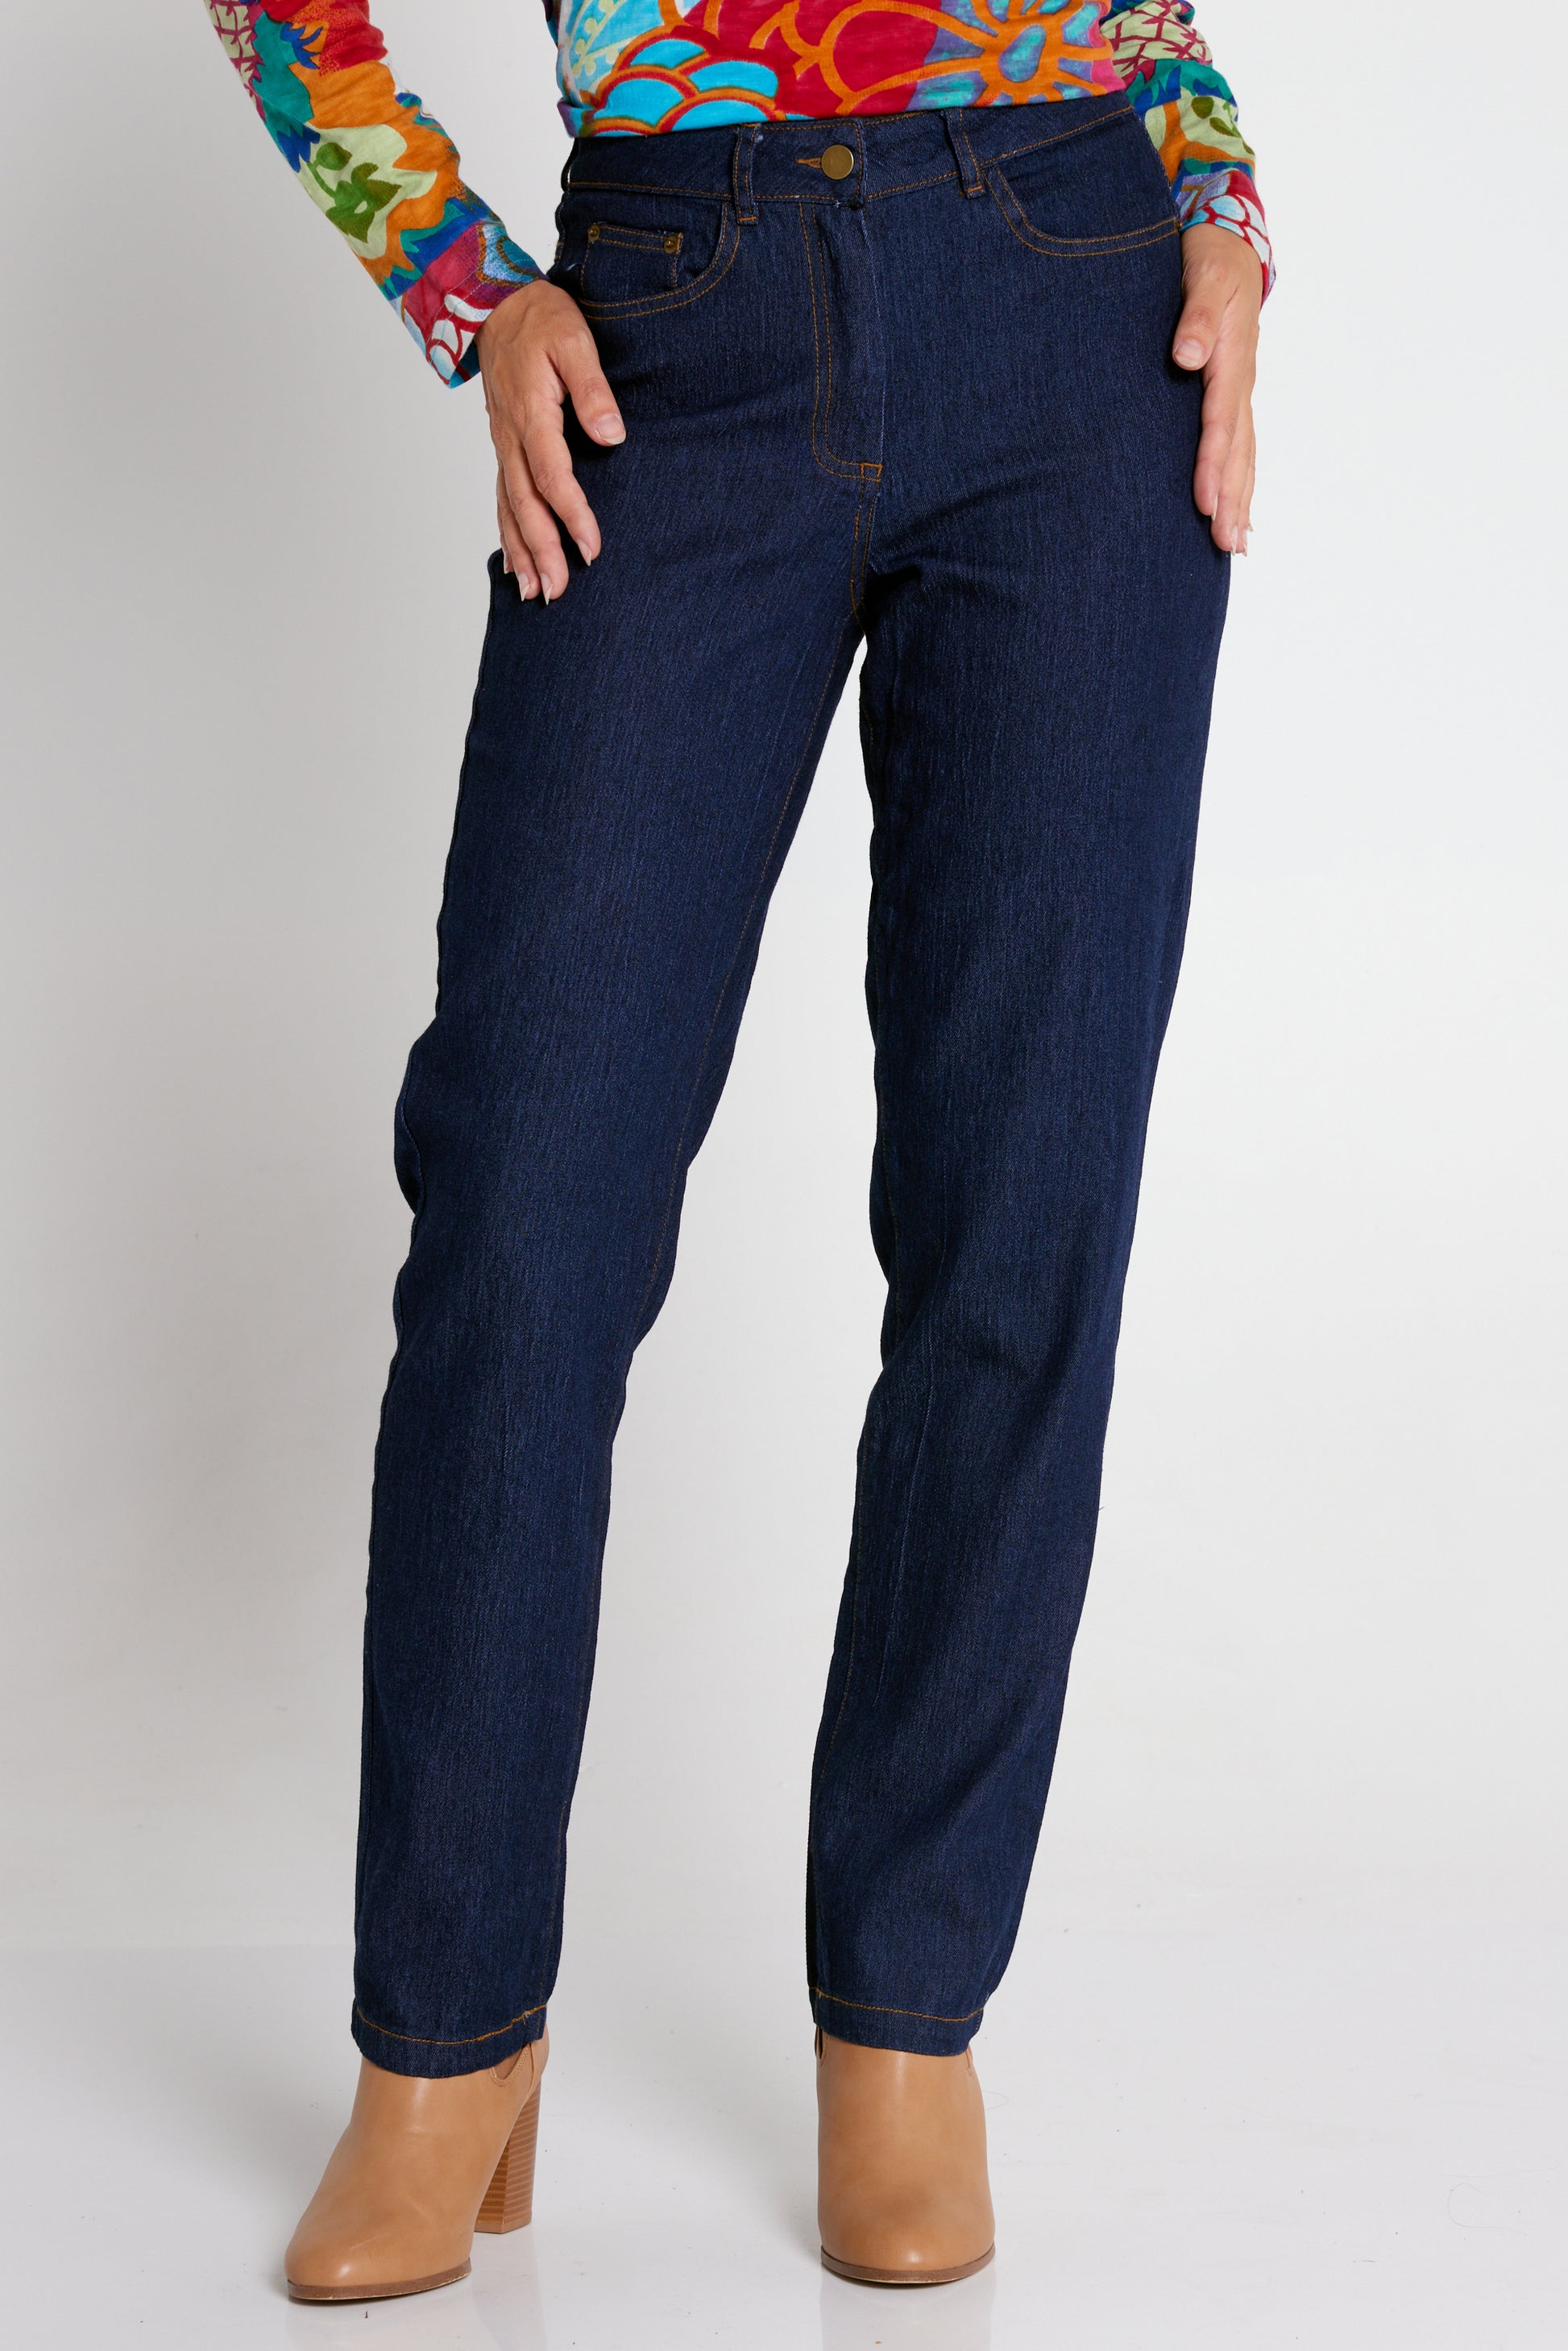 TULIO Mature Fashion  Hillwood Pull On Jeans - Dark Wash